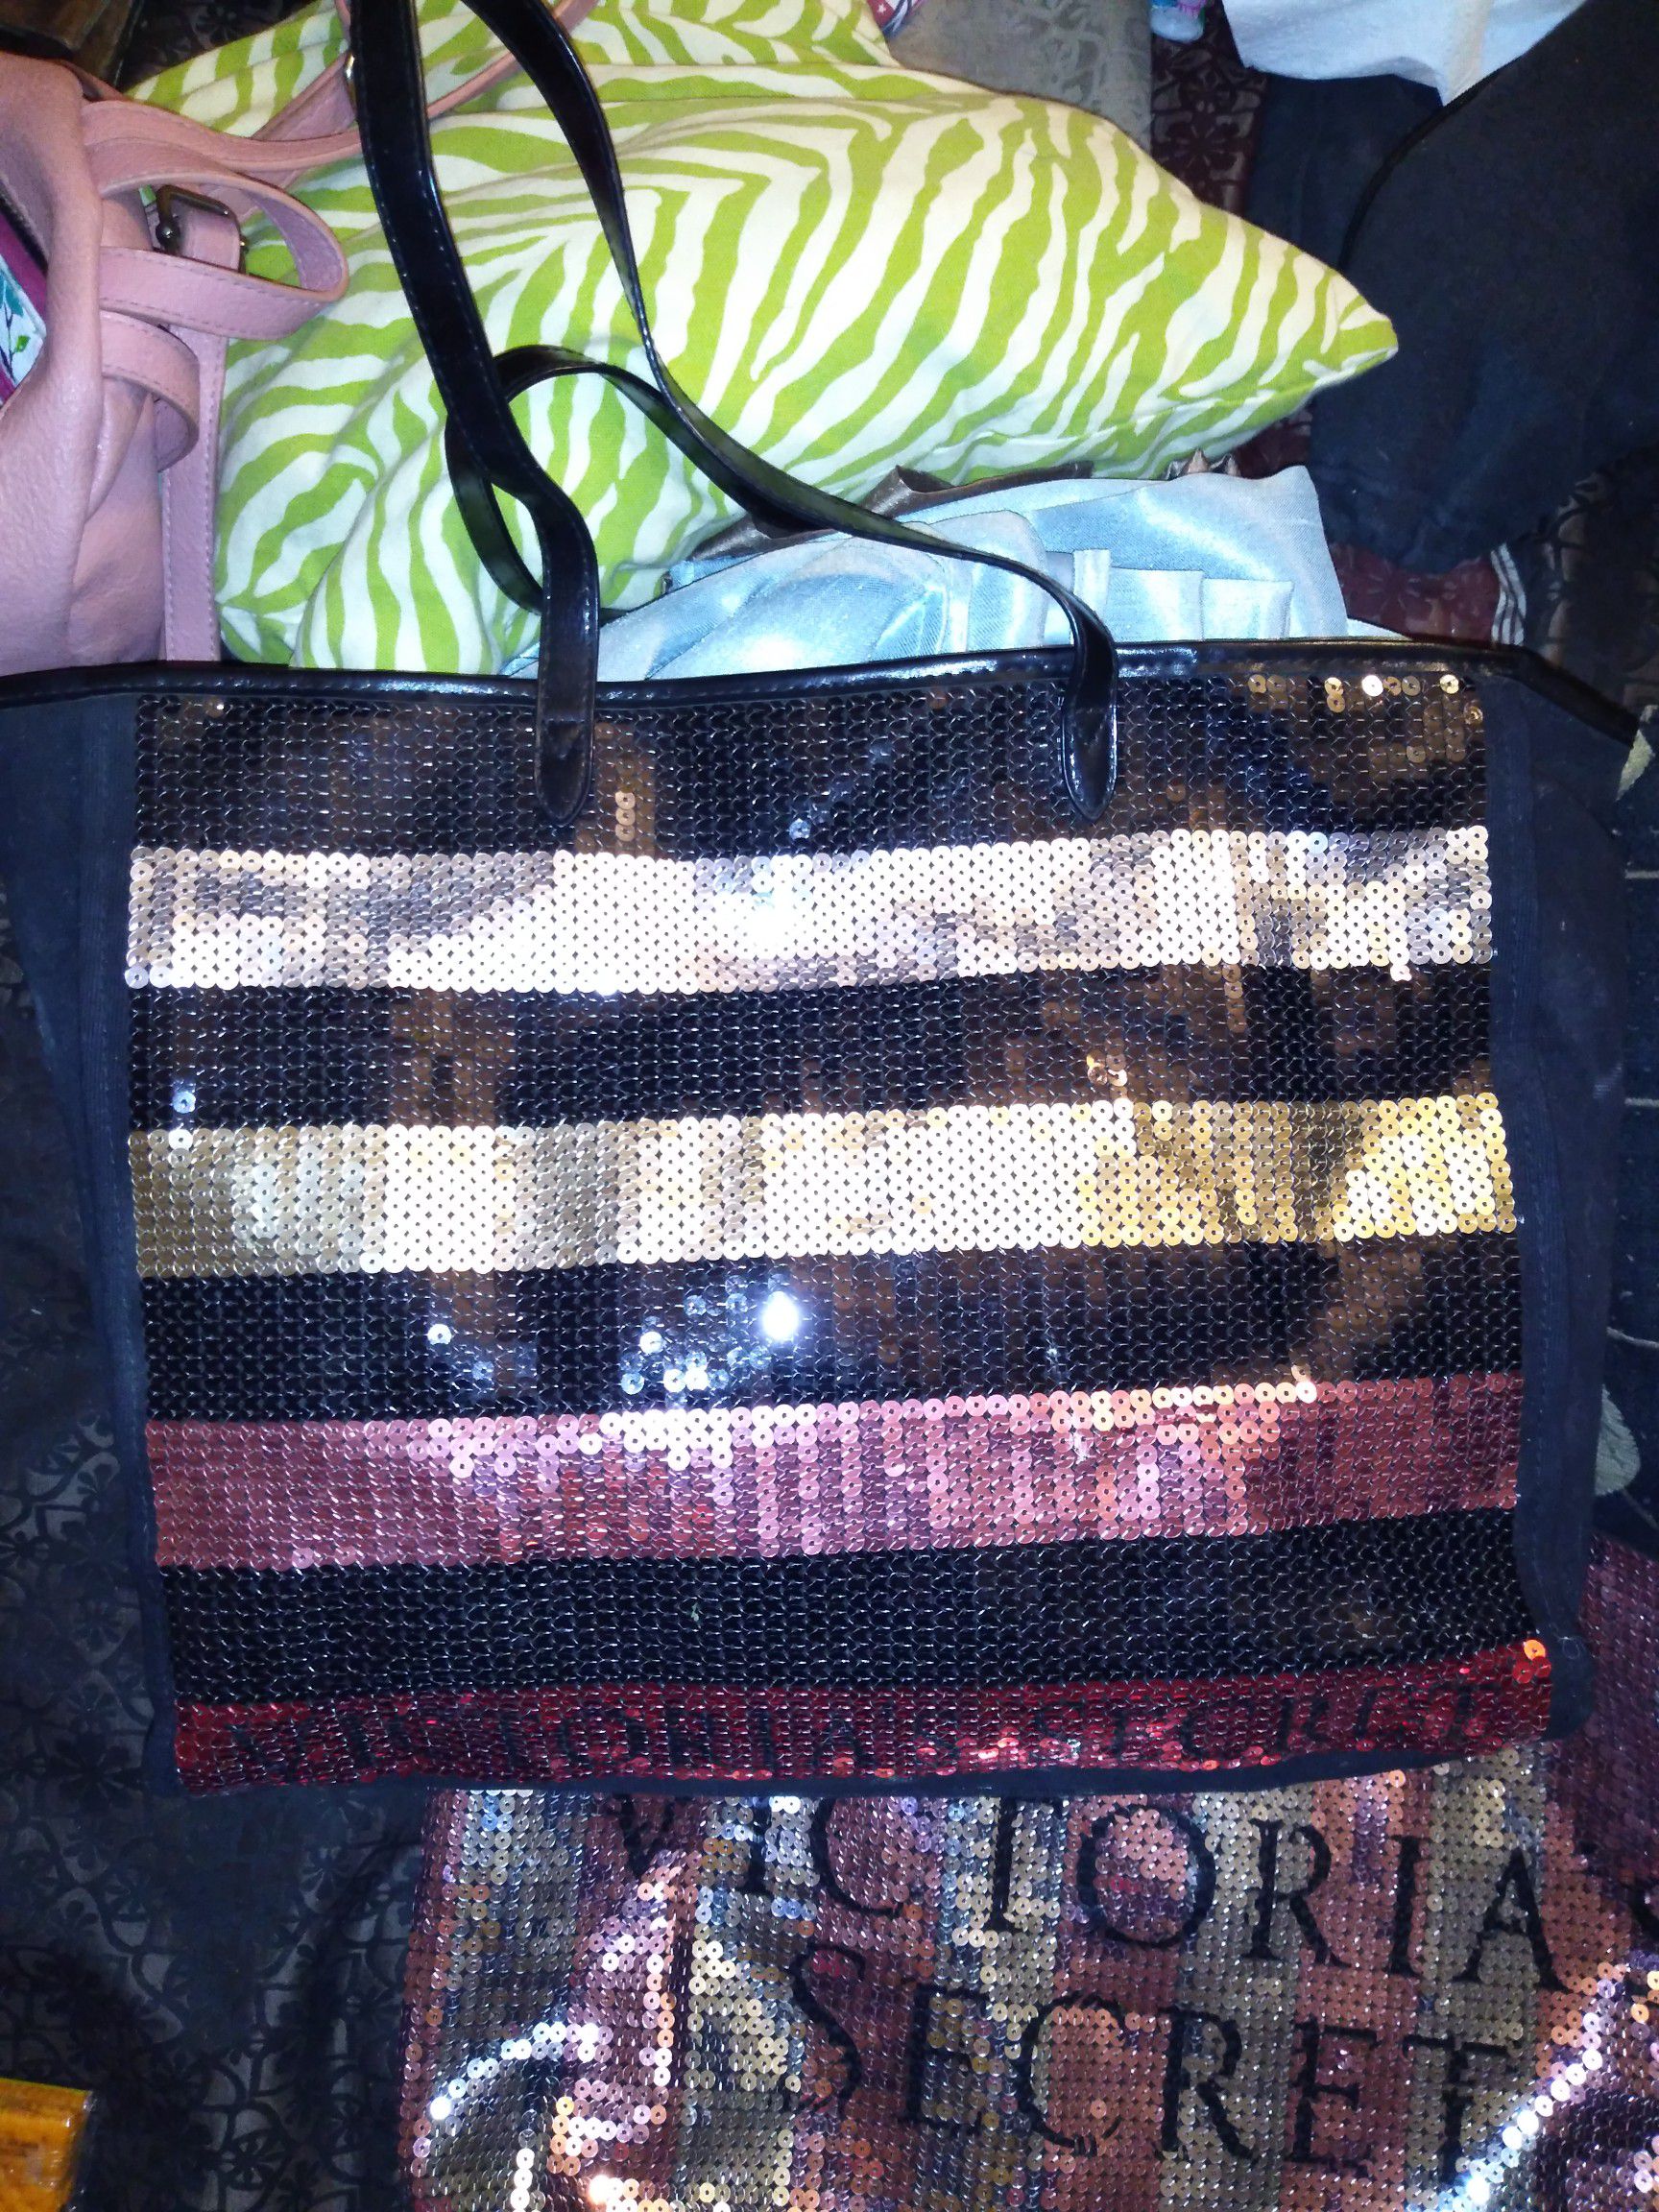 Victoria's secret tote bag